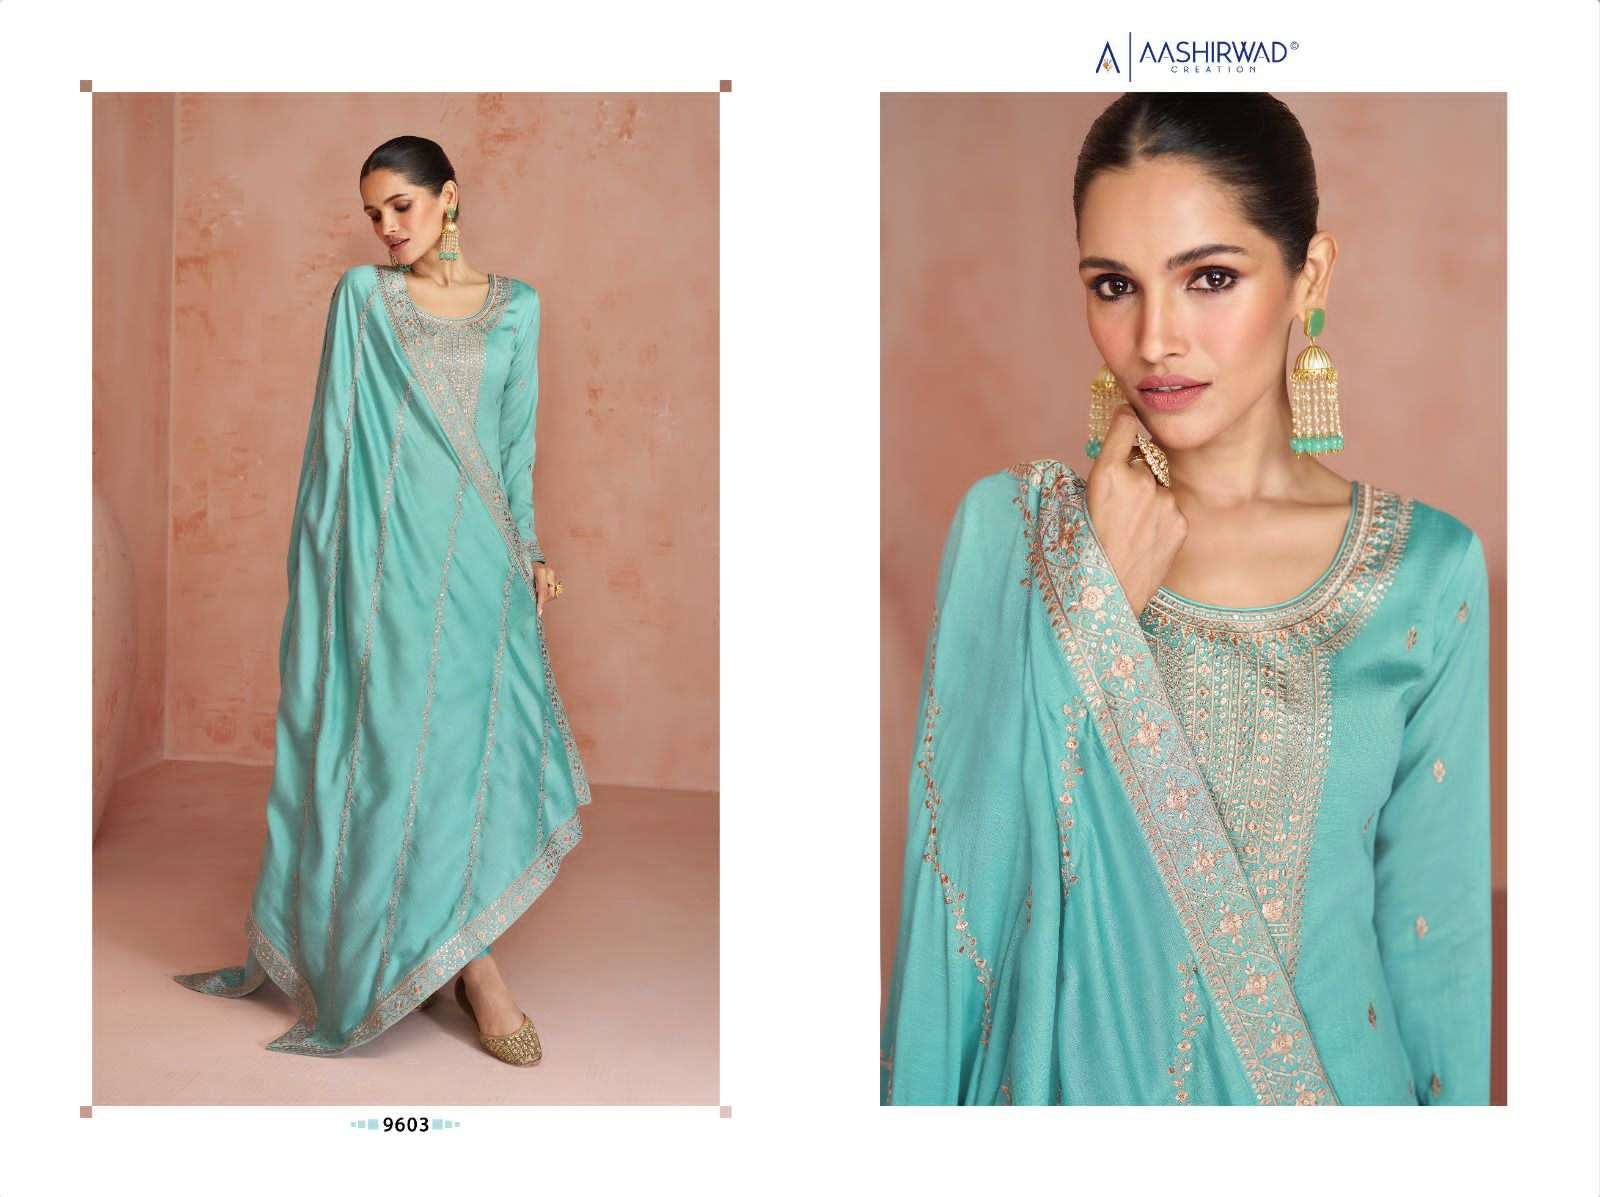 aashirwad creation coco 9602-9606 series party wear designer salwar suits latest collection surat